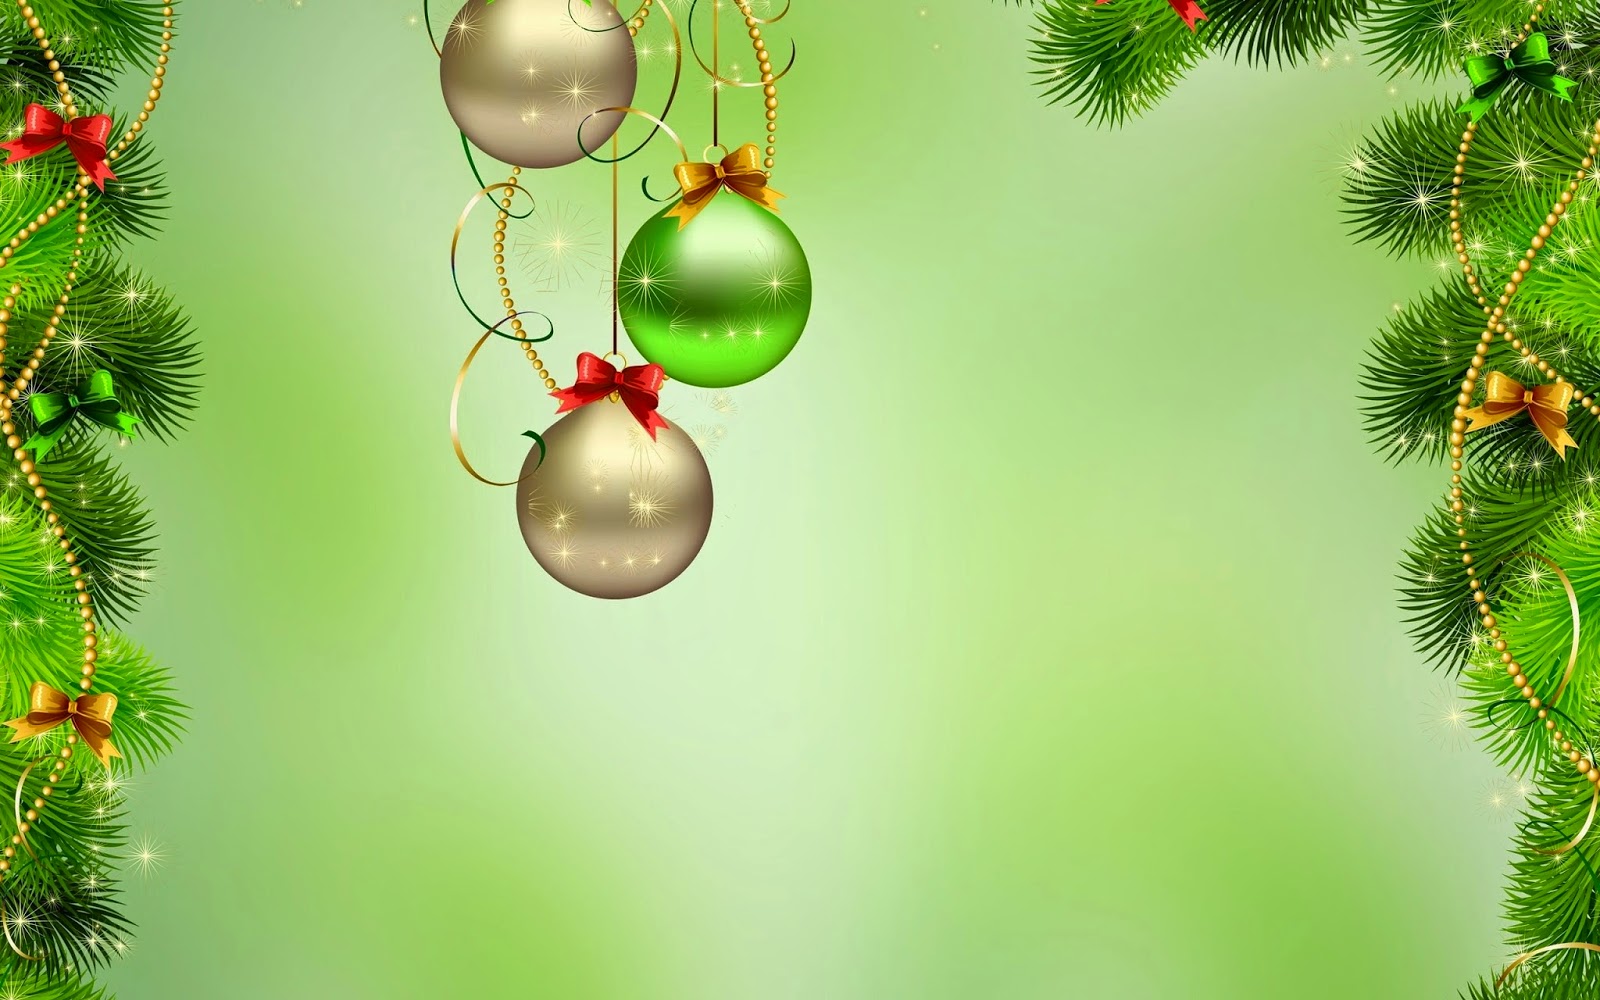 크리스마스 카드 벽지,크리스마스 장식,초록,크리스마스 장식,나무,크리스마스 트리